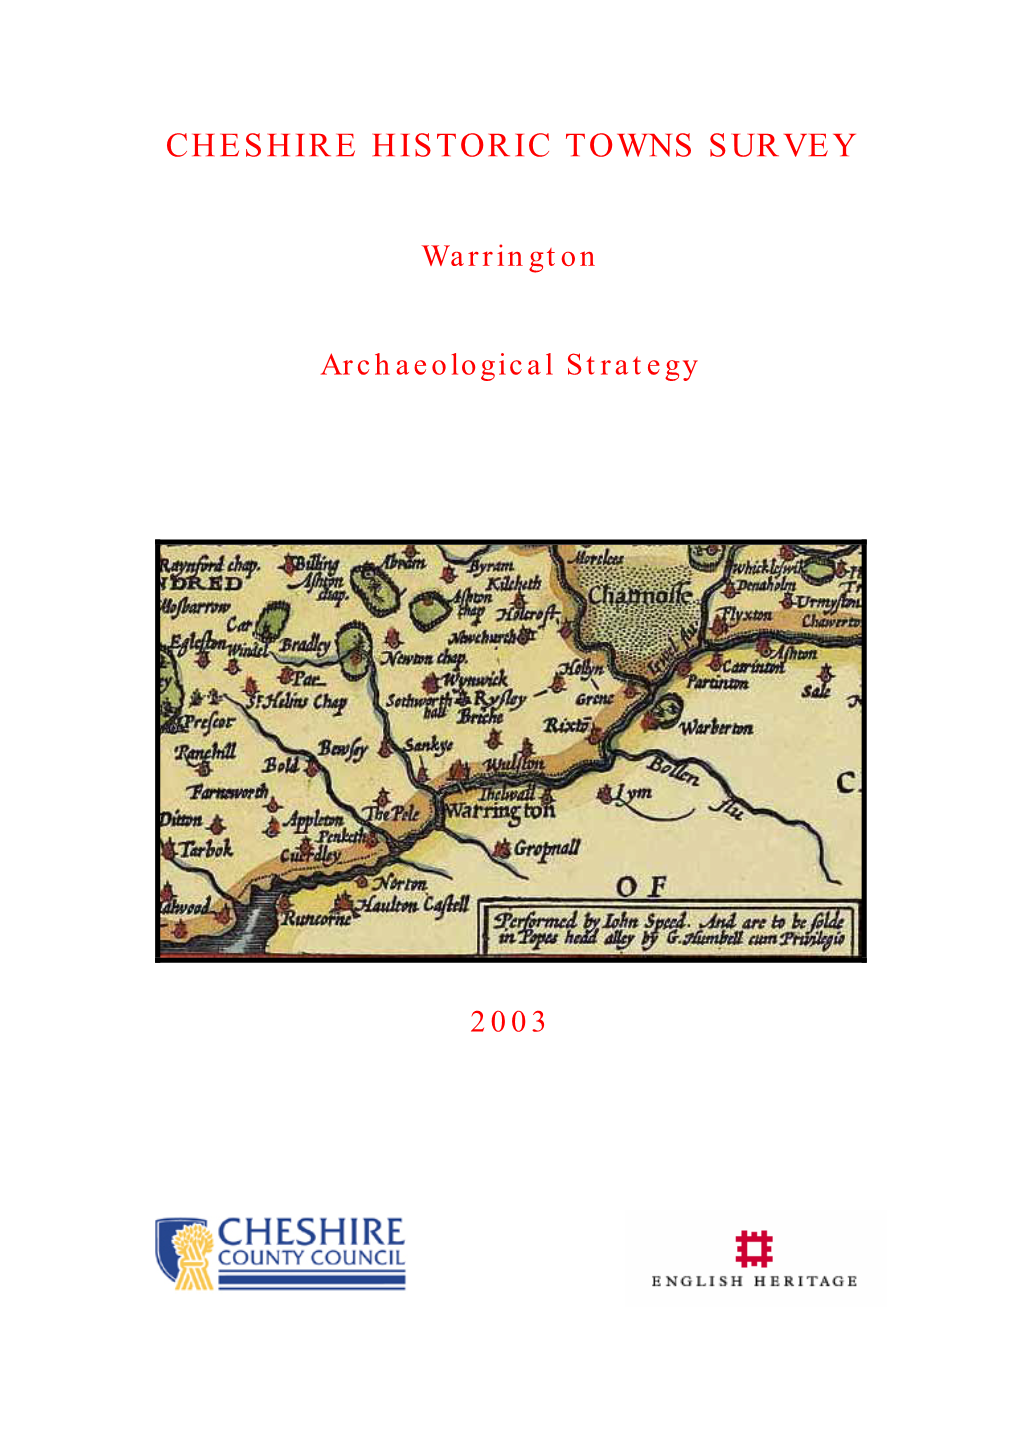 Warrington Archaeological Strategy